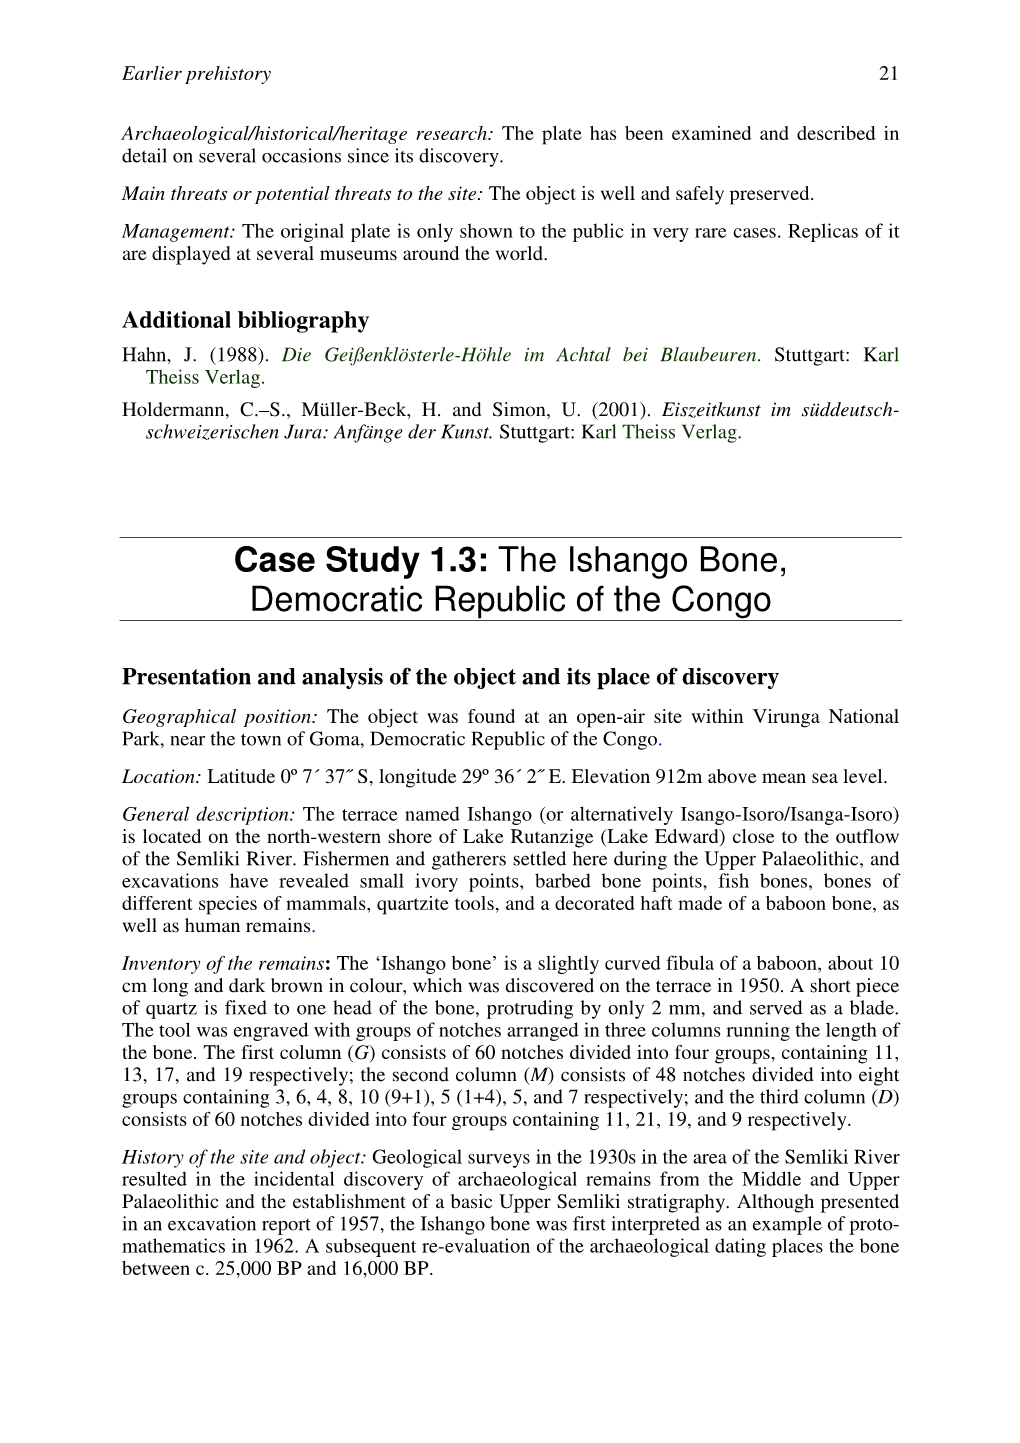 Case Study 1.3: the Ishango Bone, Democratic Republic of the Congo